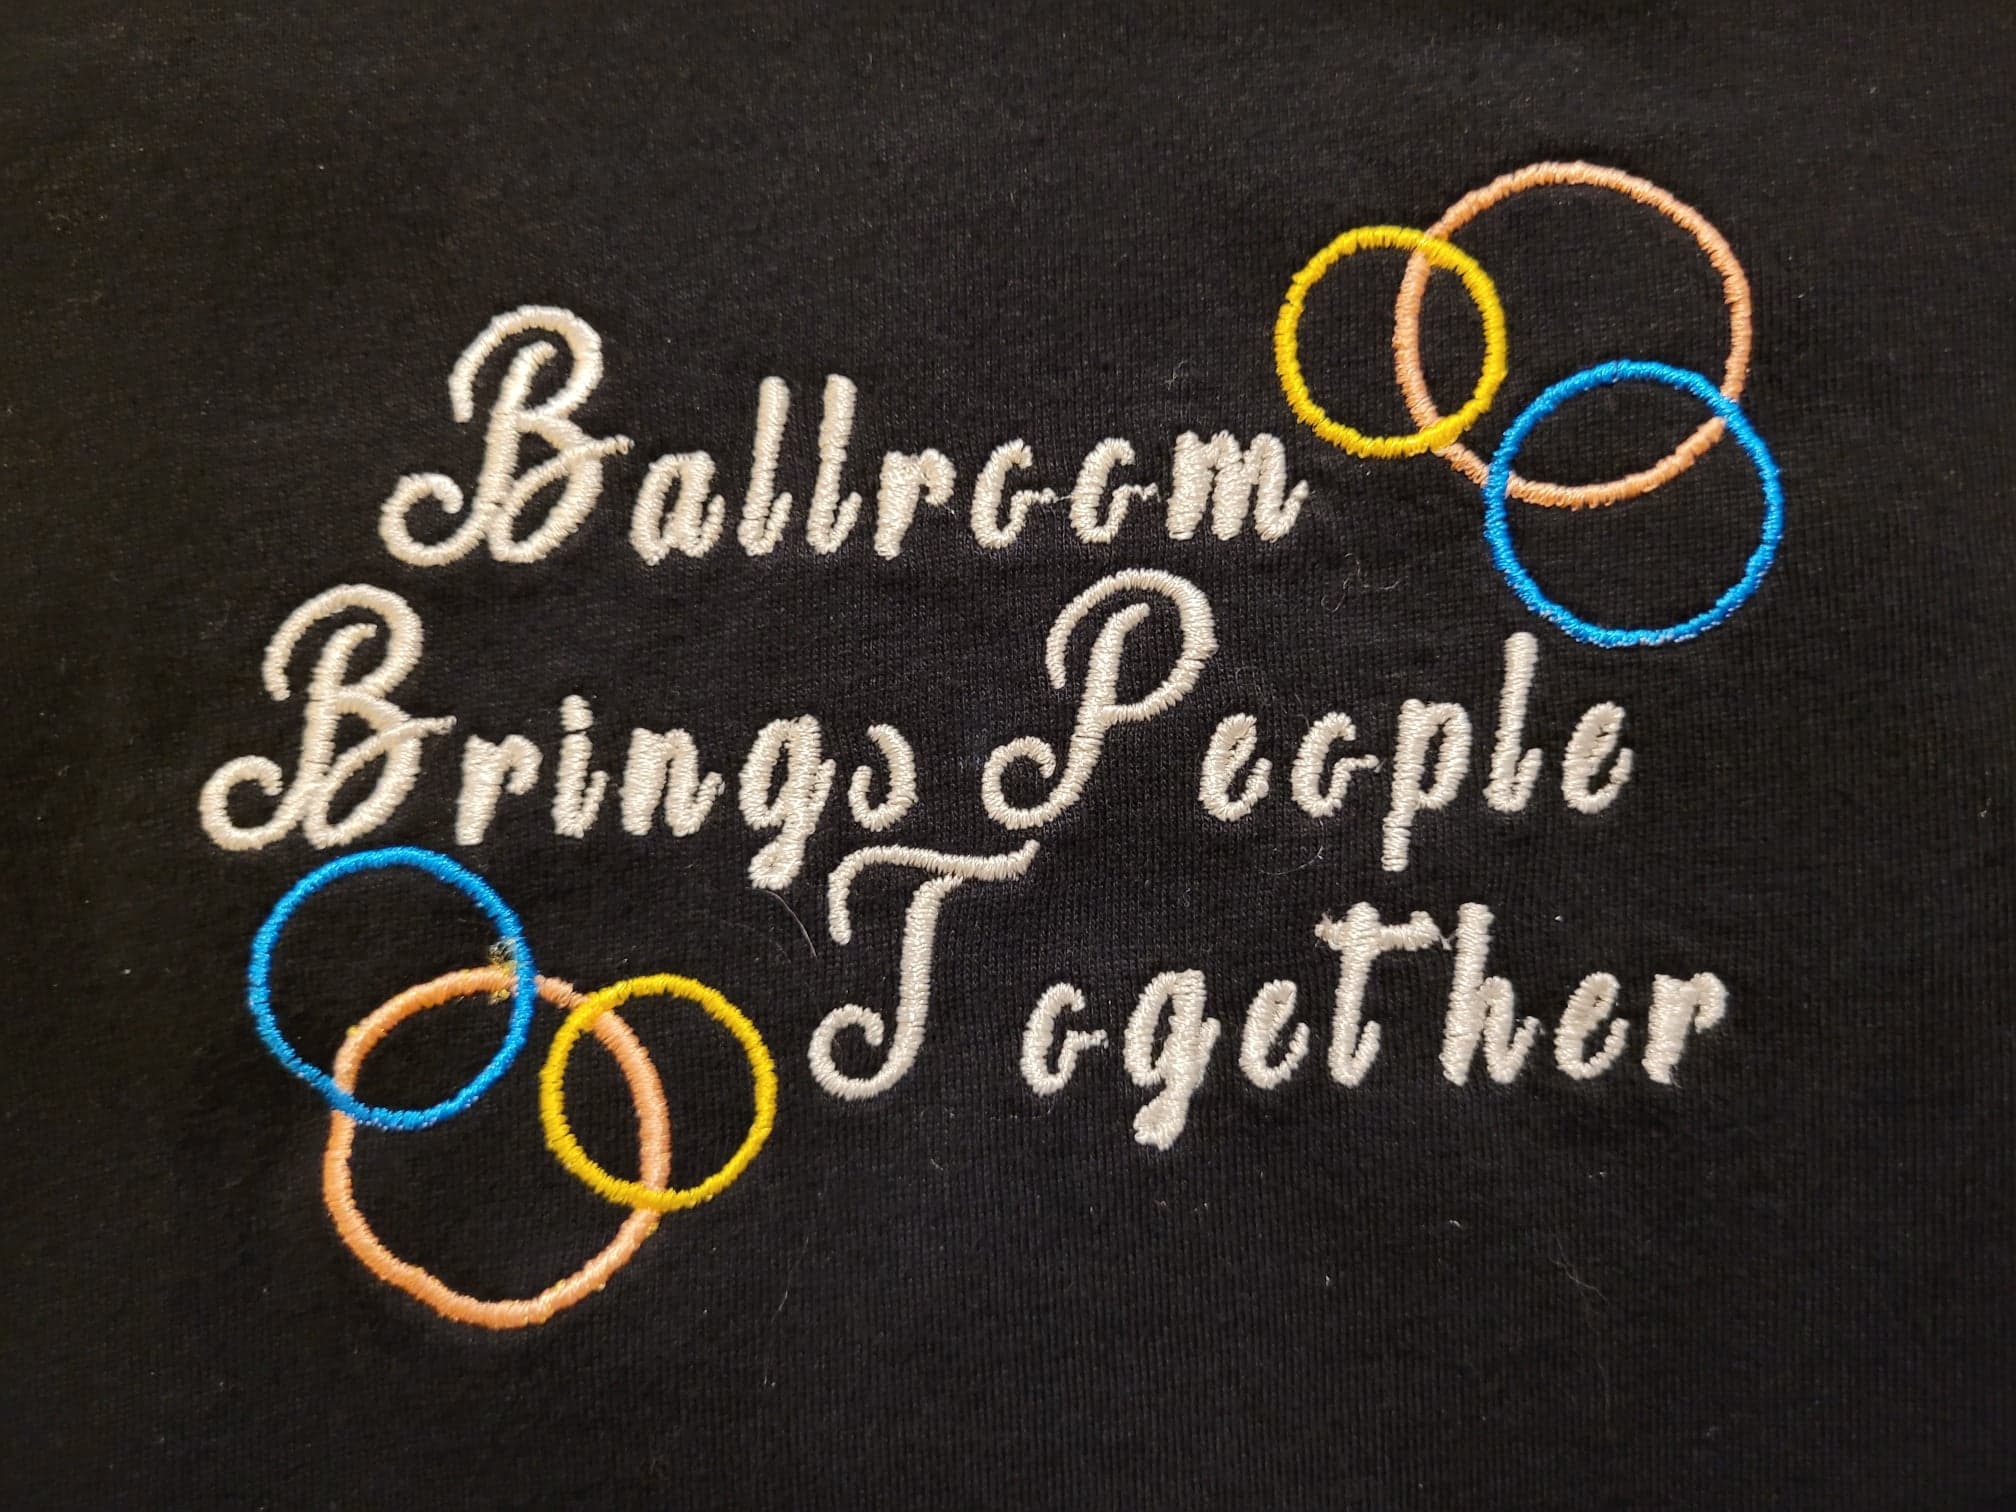 Ballroom Brings People Together